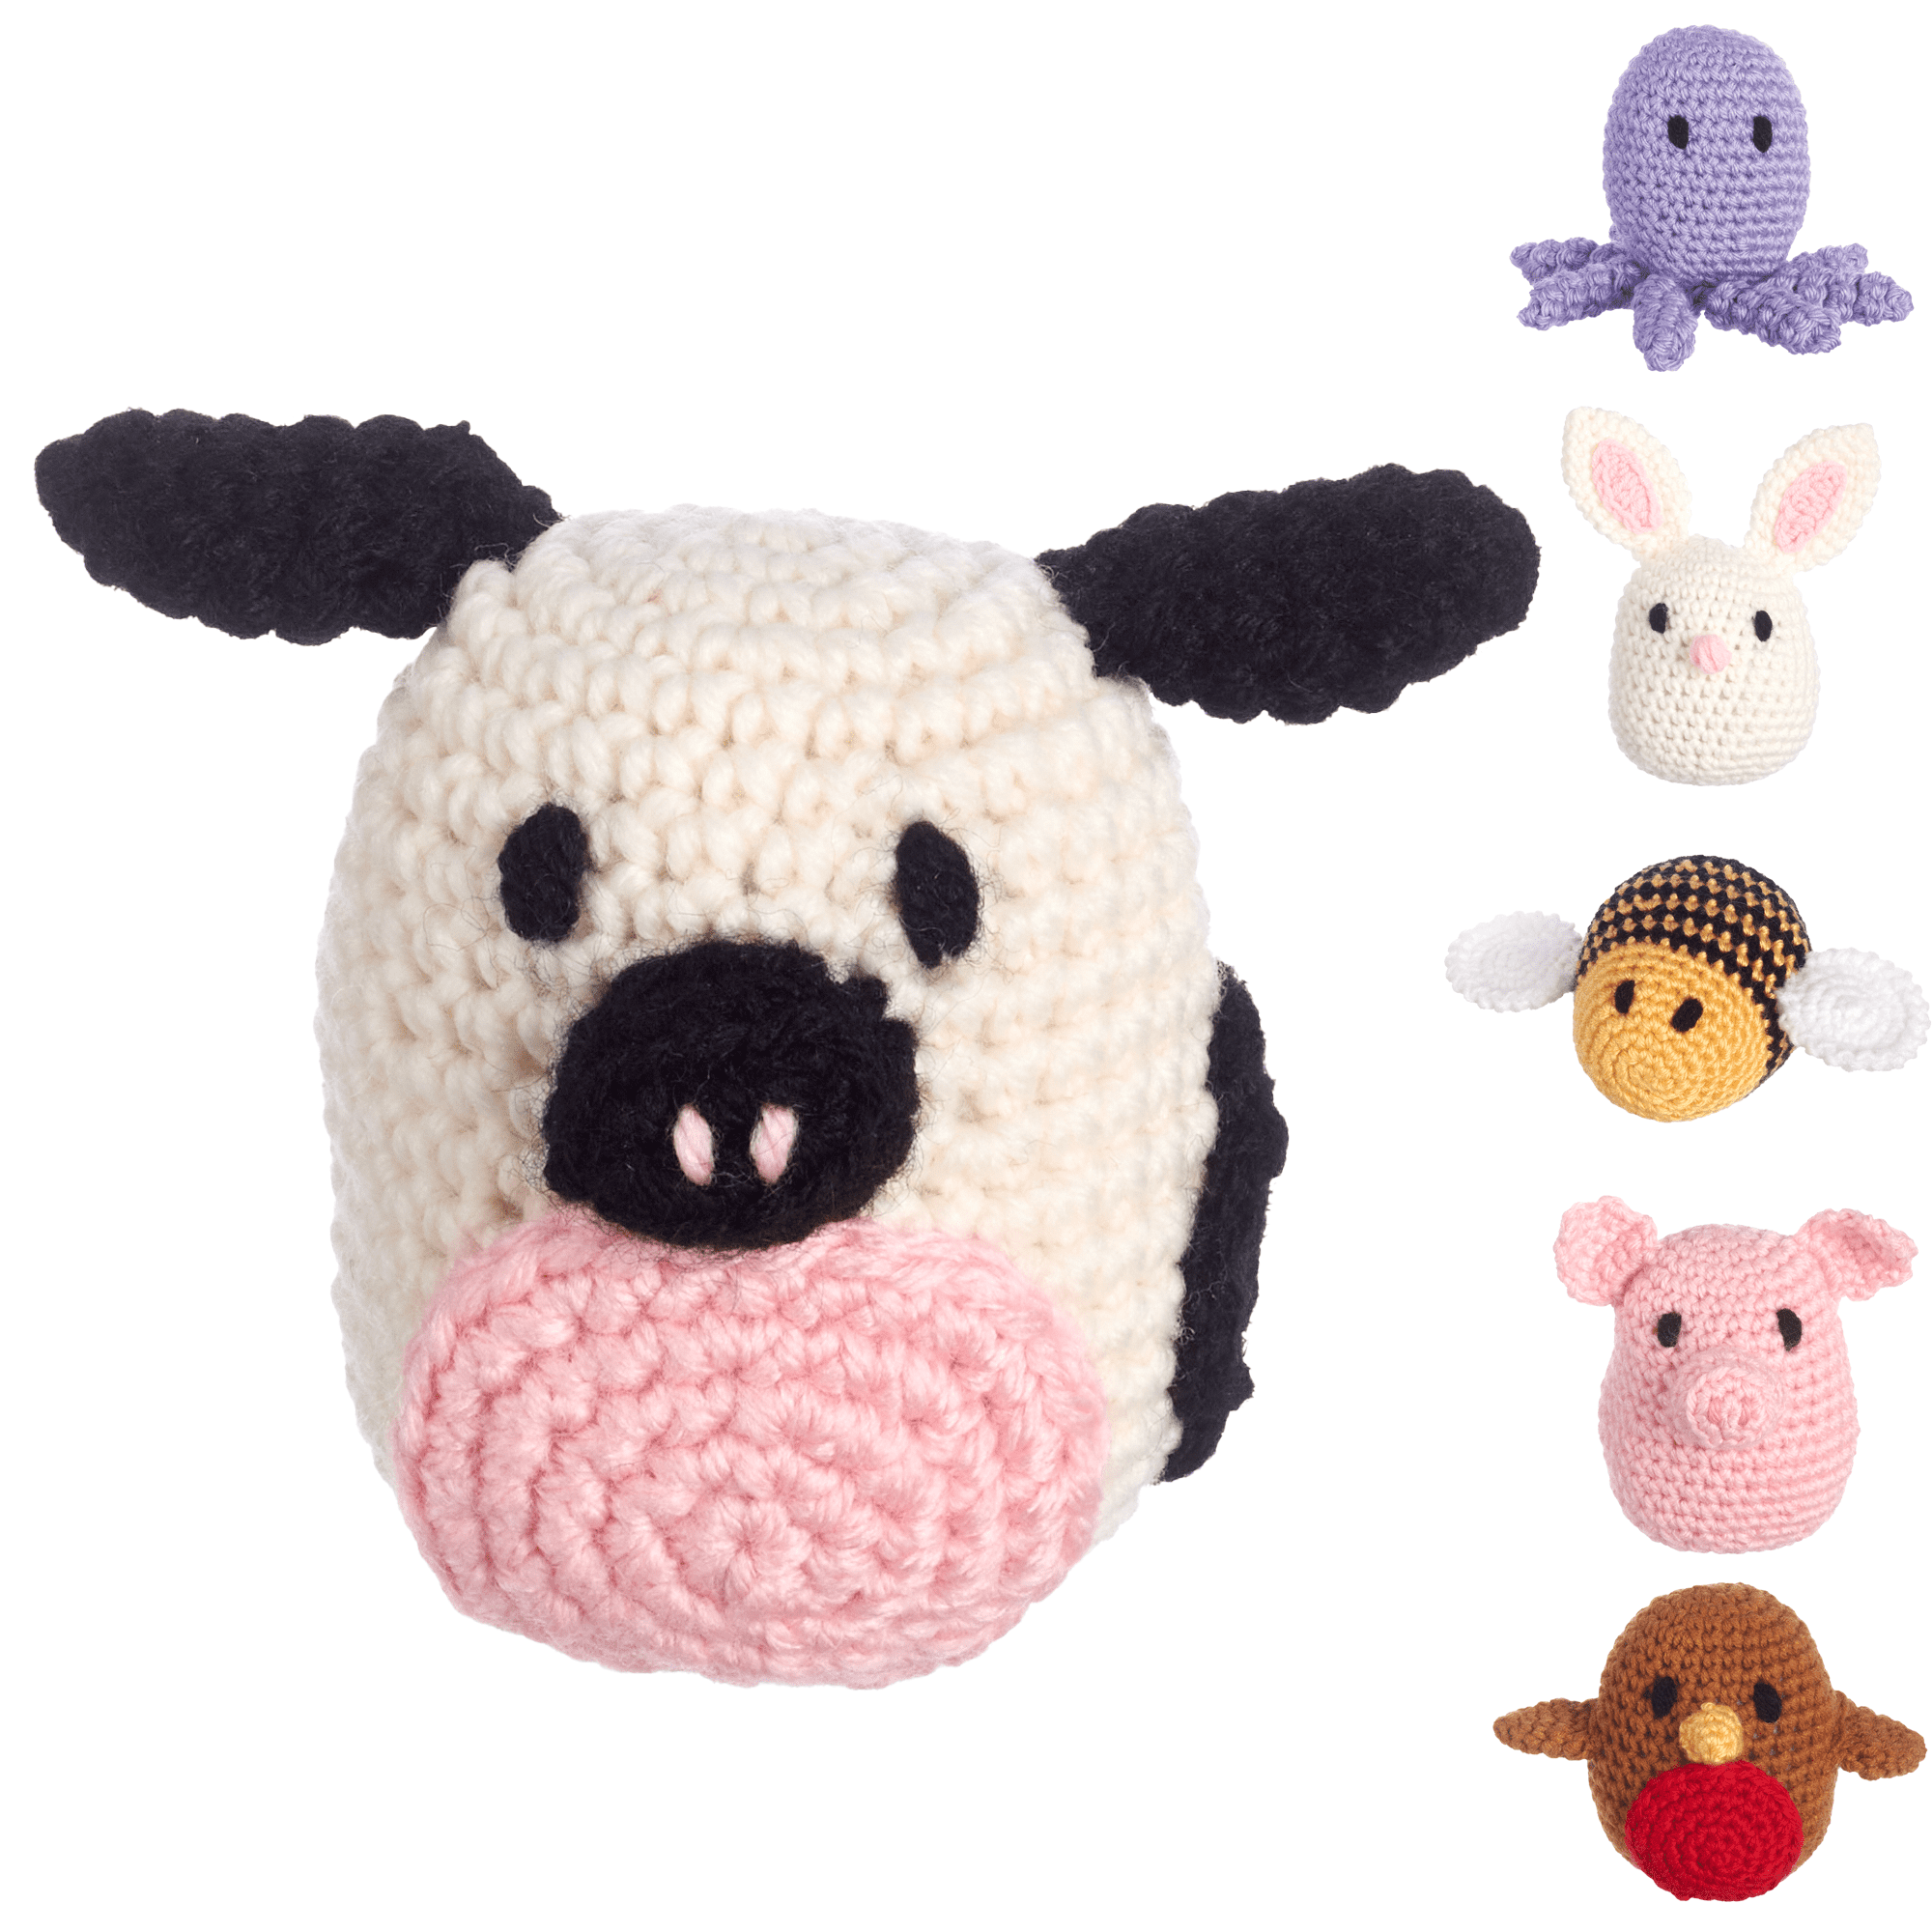 Bonnie The Cow Animal Crochet Kit